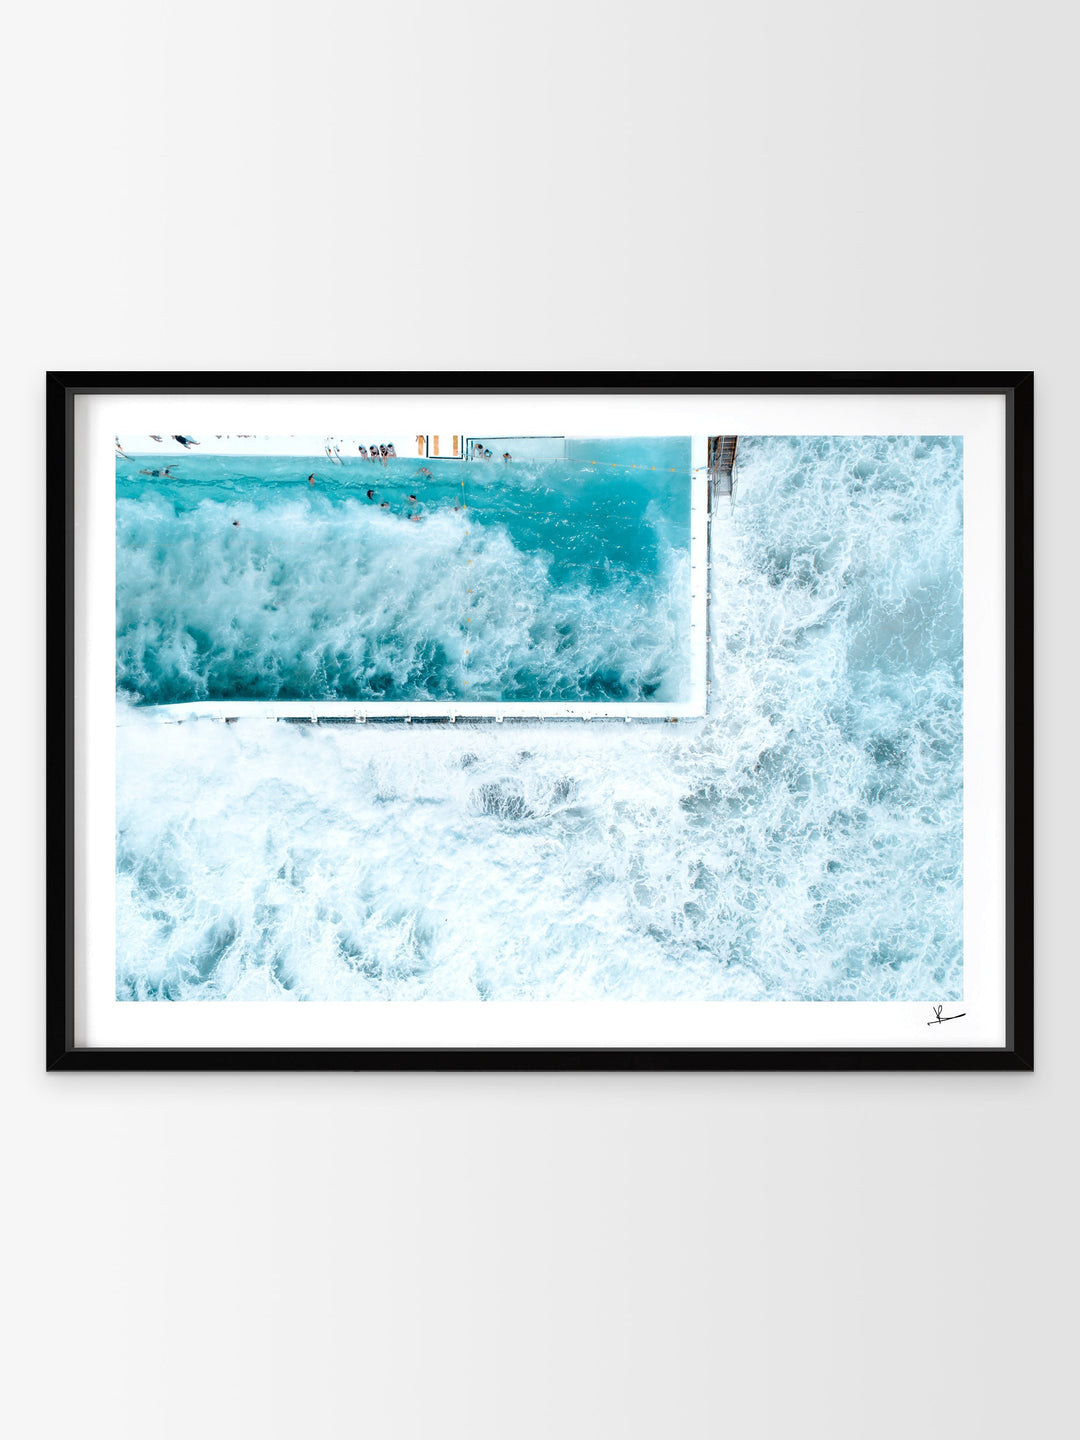 Icebergs Wipe Out 03 - Wall Art Print - Australia Unseen